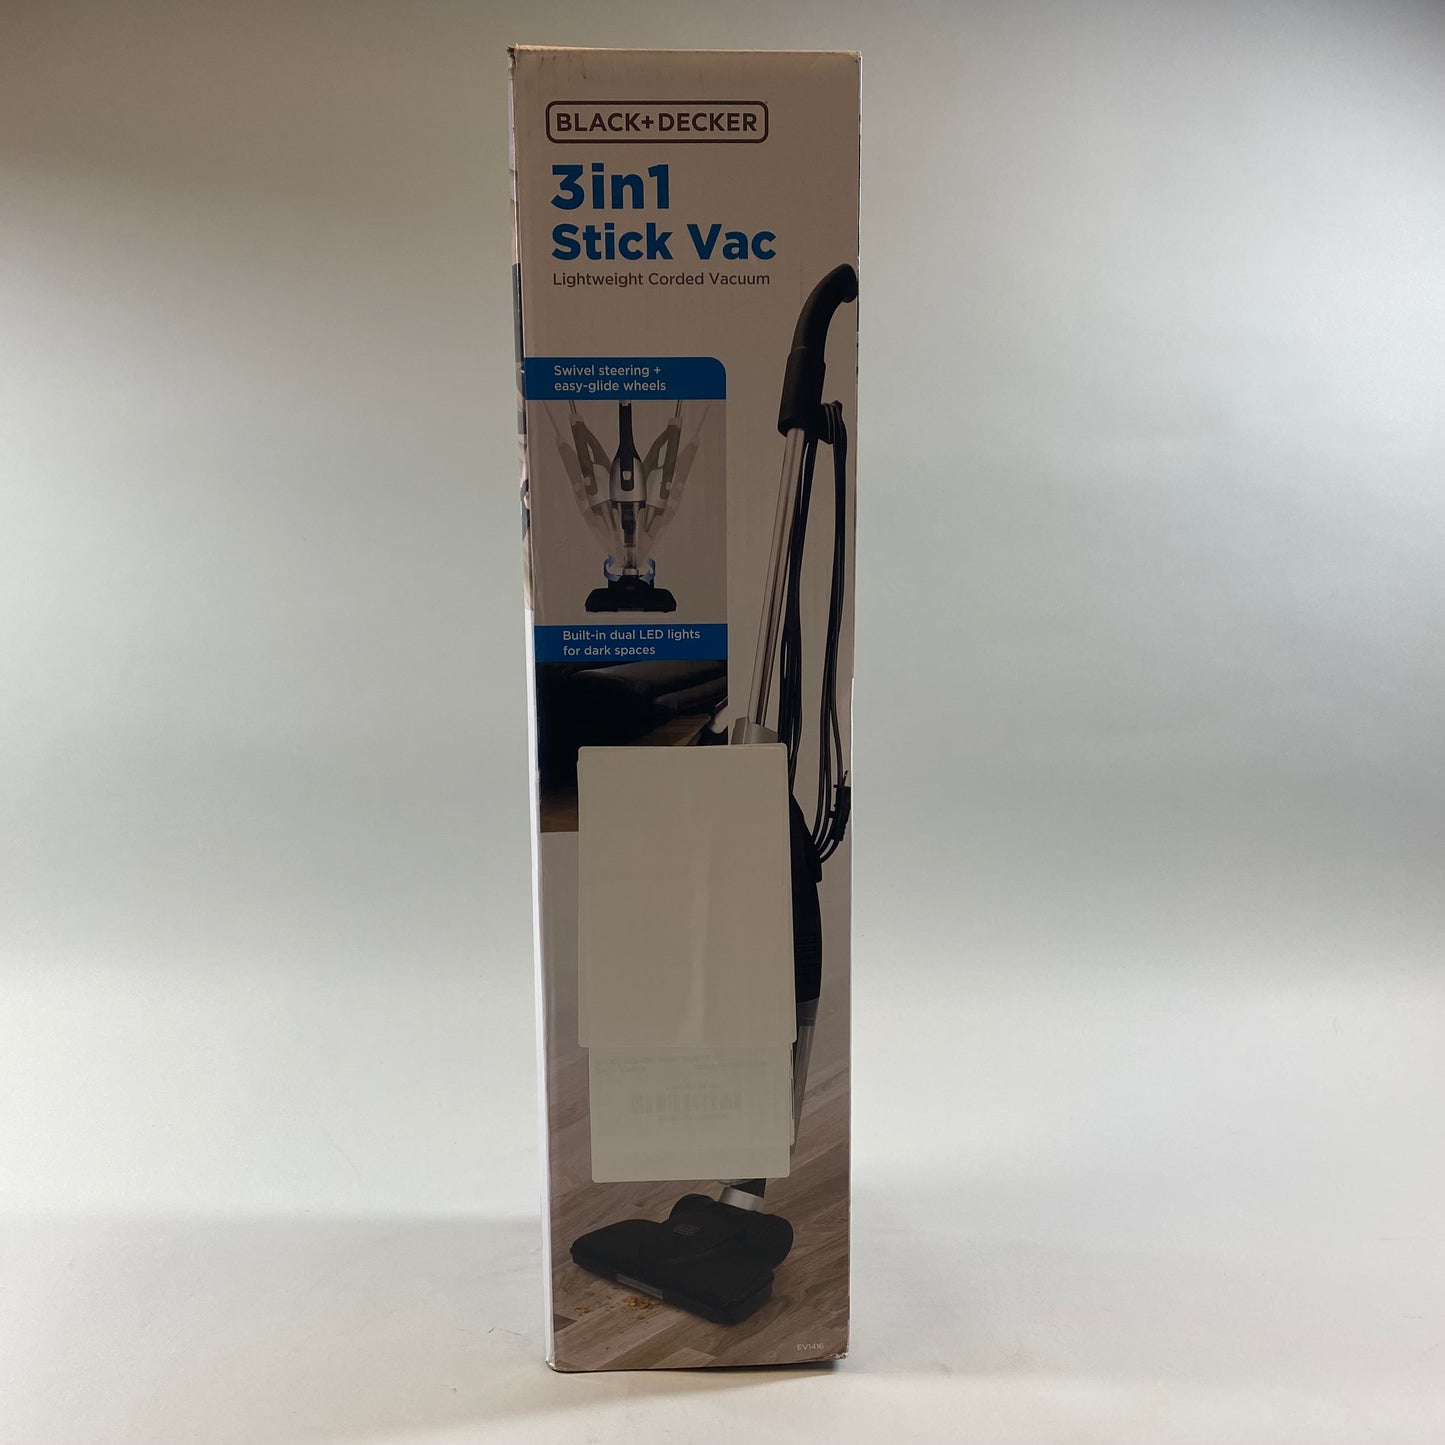 New Black+Decker 3in1 Stick Vac Lightweight Corded Vacuum EV1416